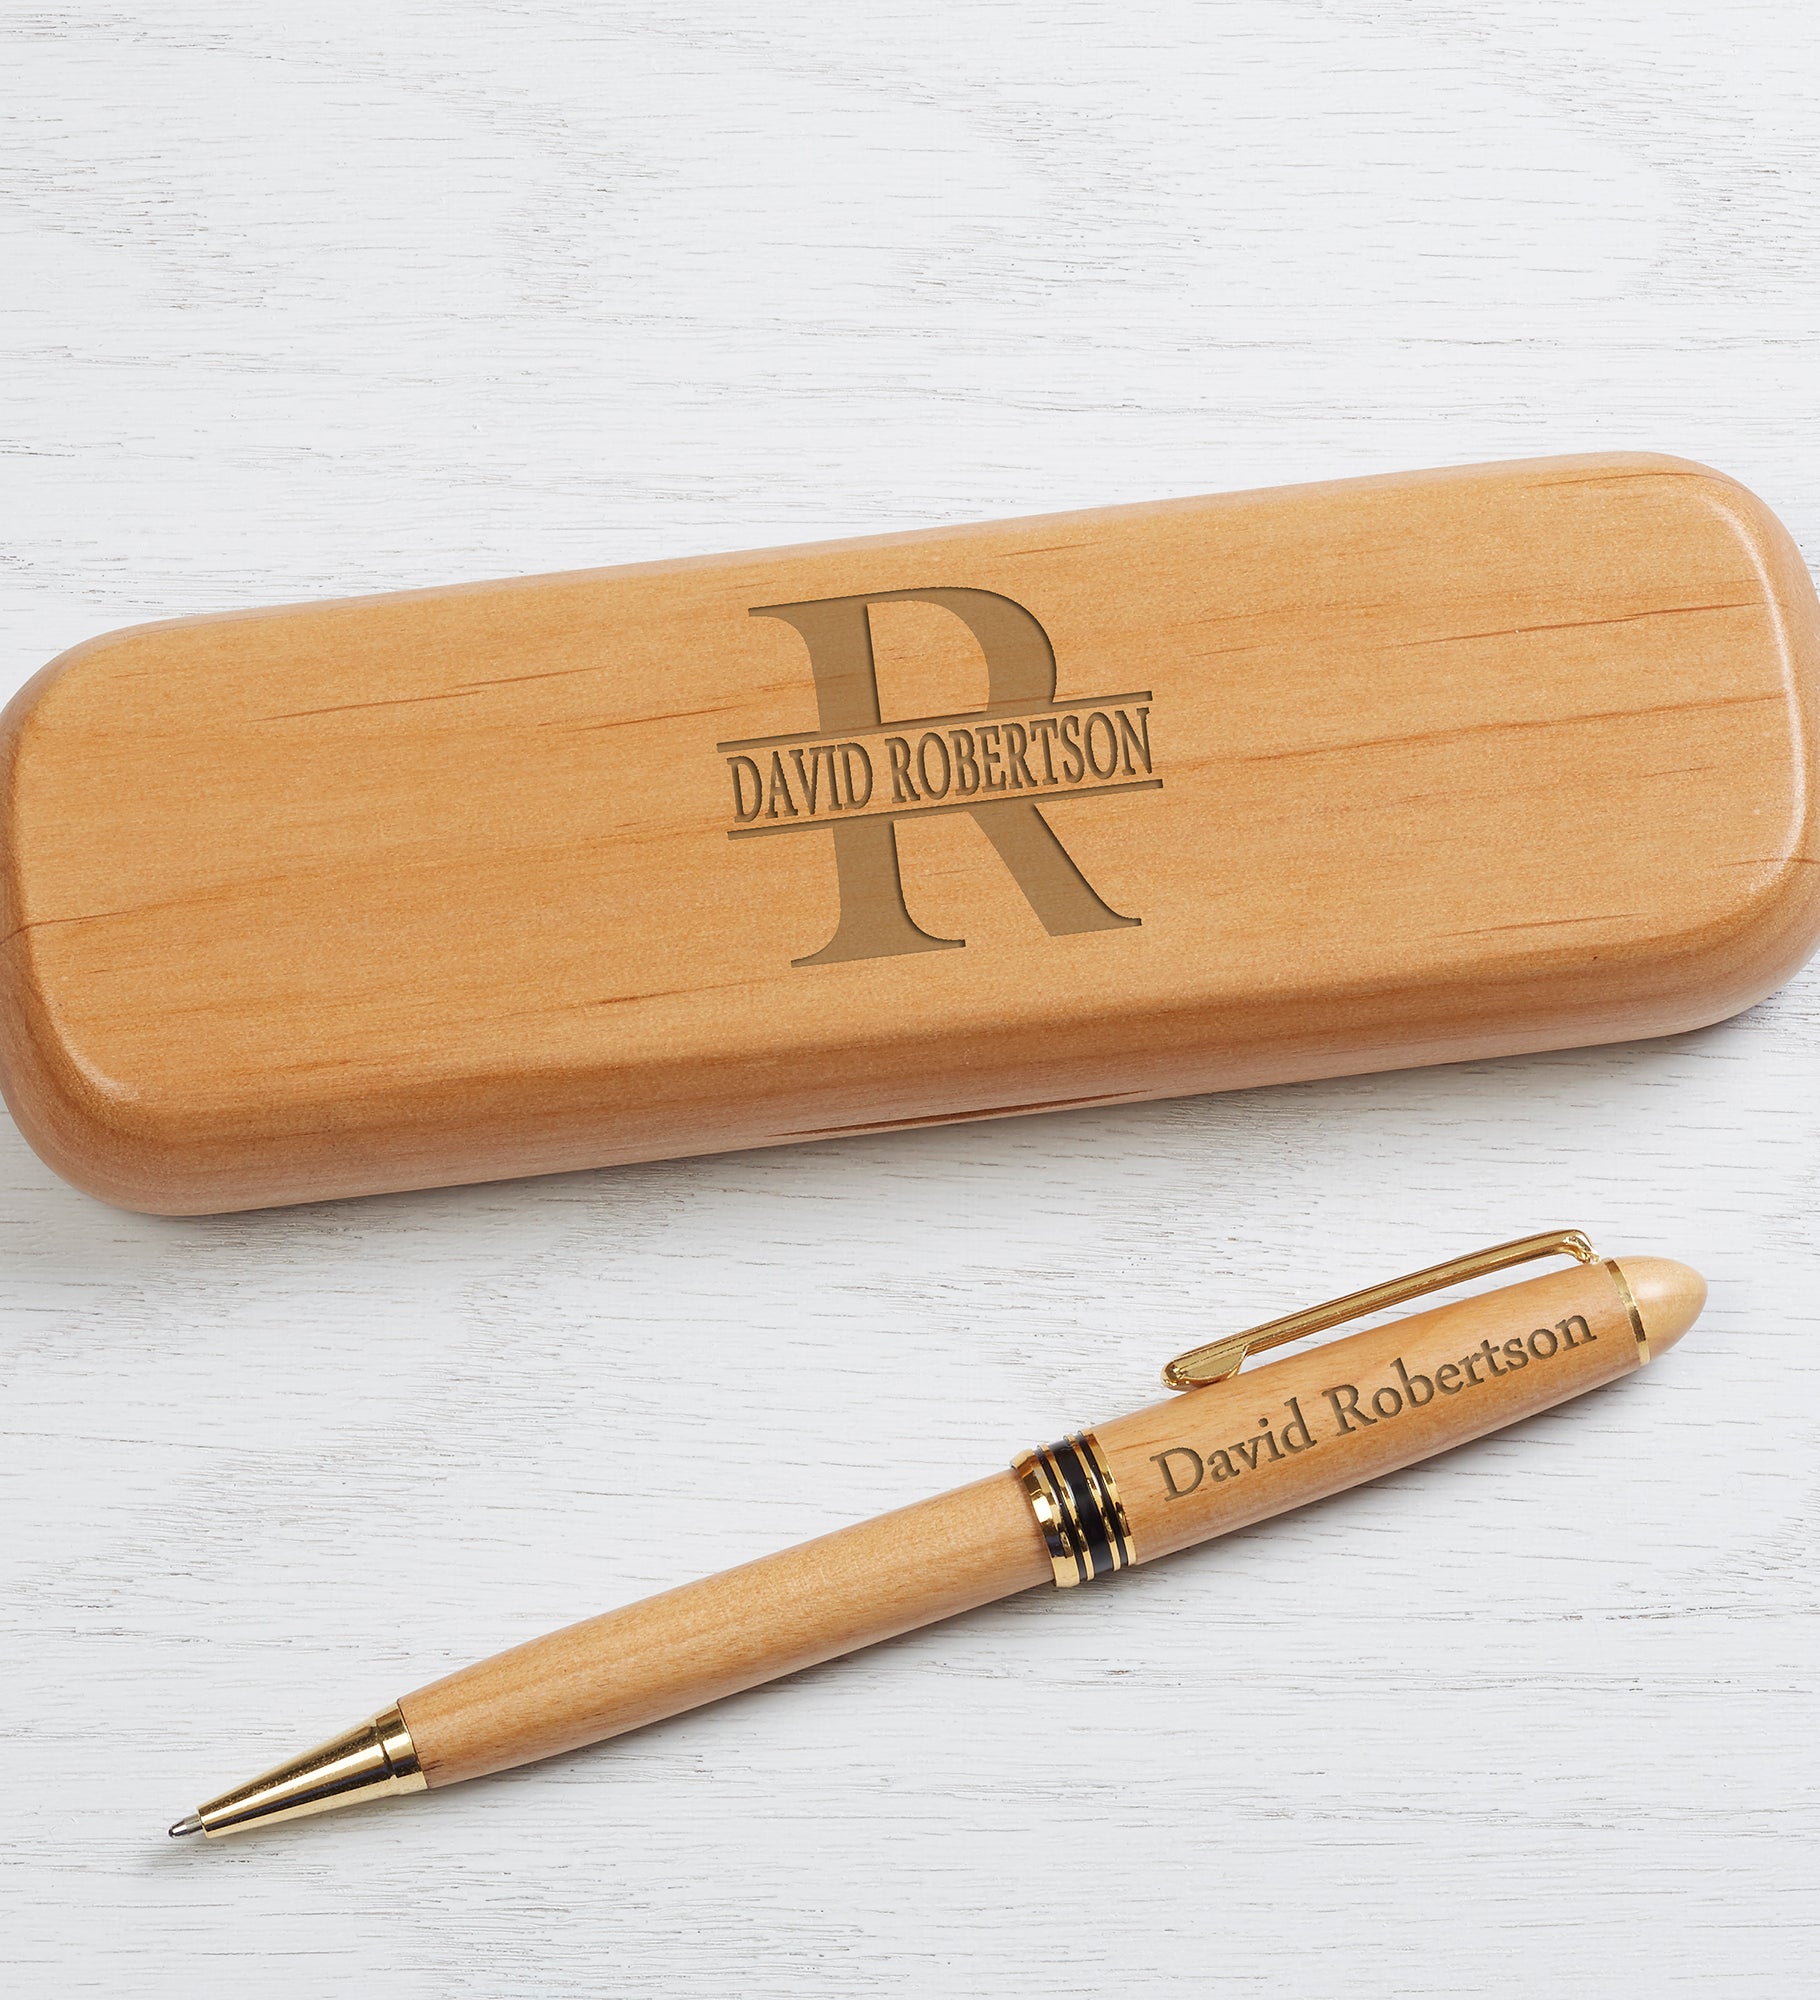 Namely Yours Personalized Alderwood Pen Set